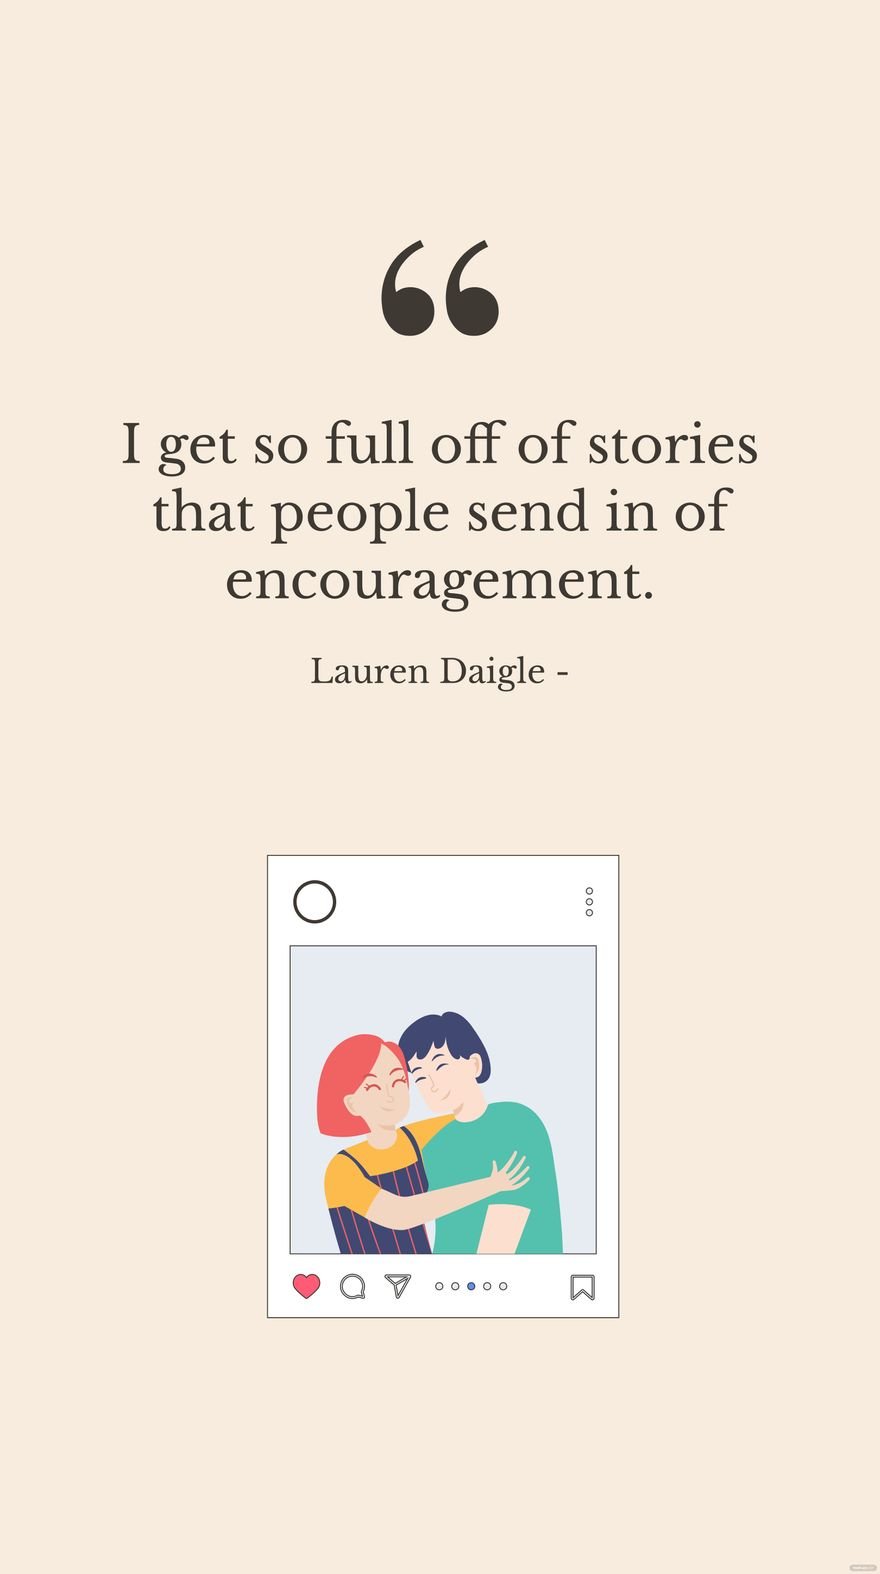 Free Lauren Daigle - I get so full off of stories that people send in of encouragement. in JPG